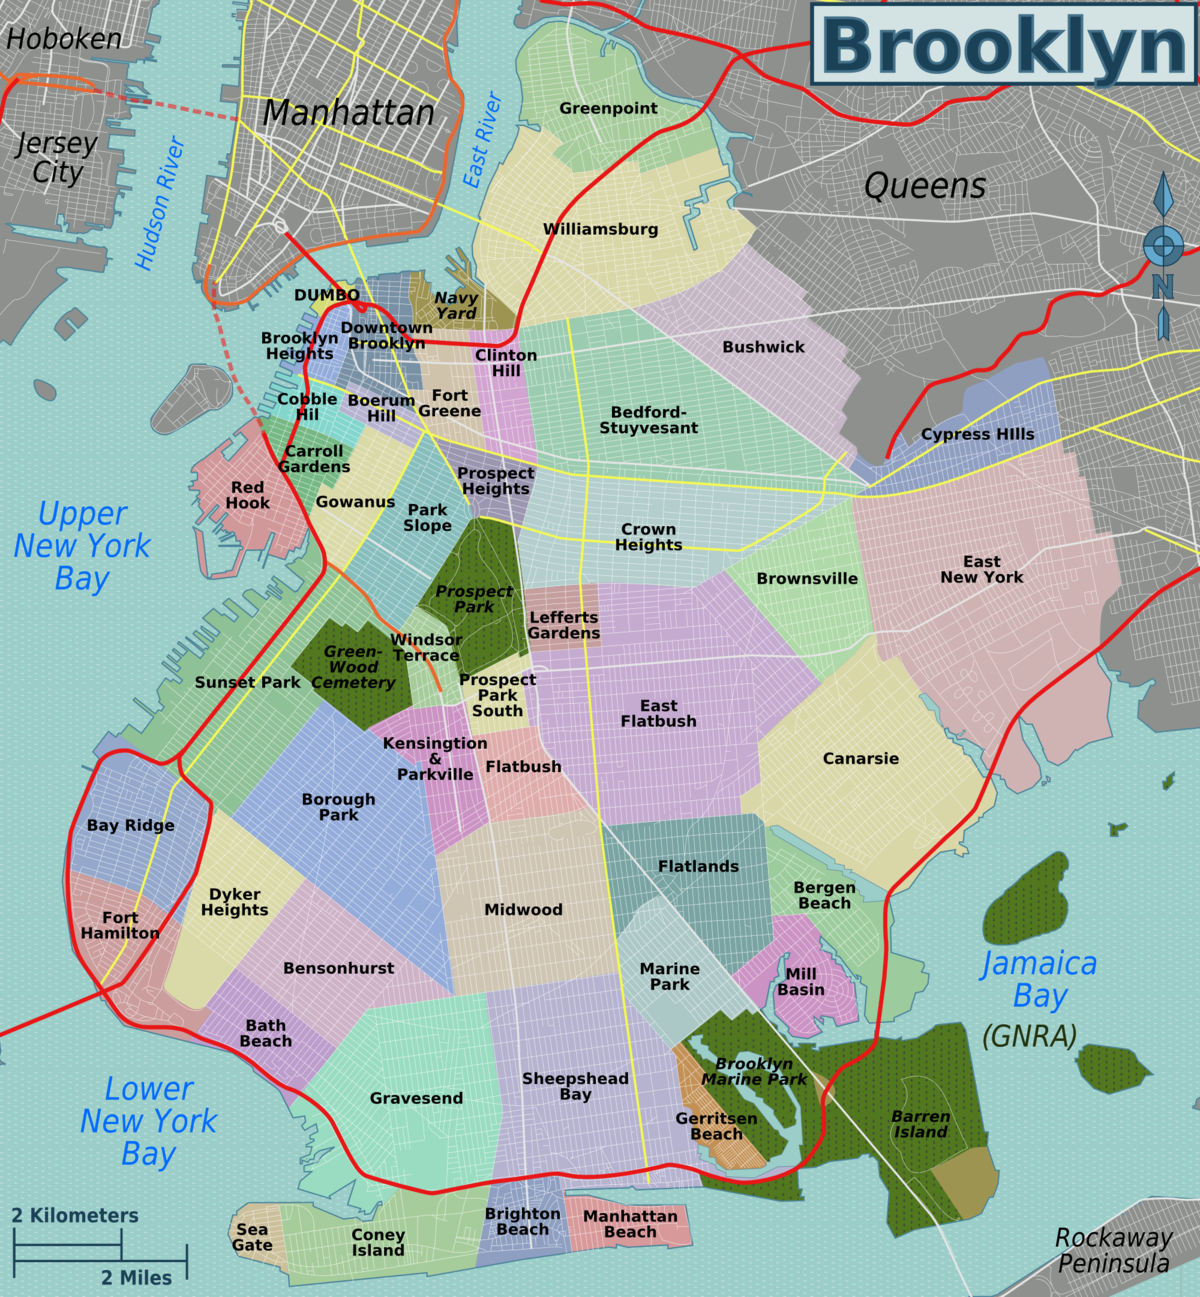 https://upload.wikimedia.org/wikipedia/commons/thumb/f/f2/Brooklyn_neighborhoods_map.png/1200px-Brooklyn_neighborhoods_map.png